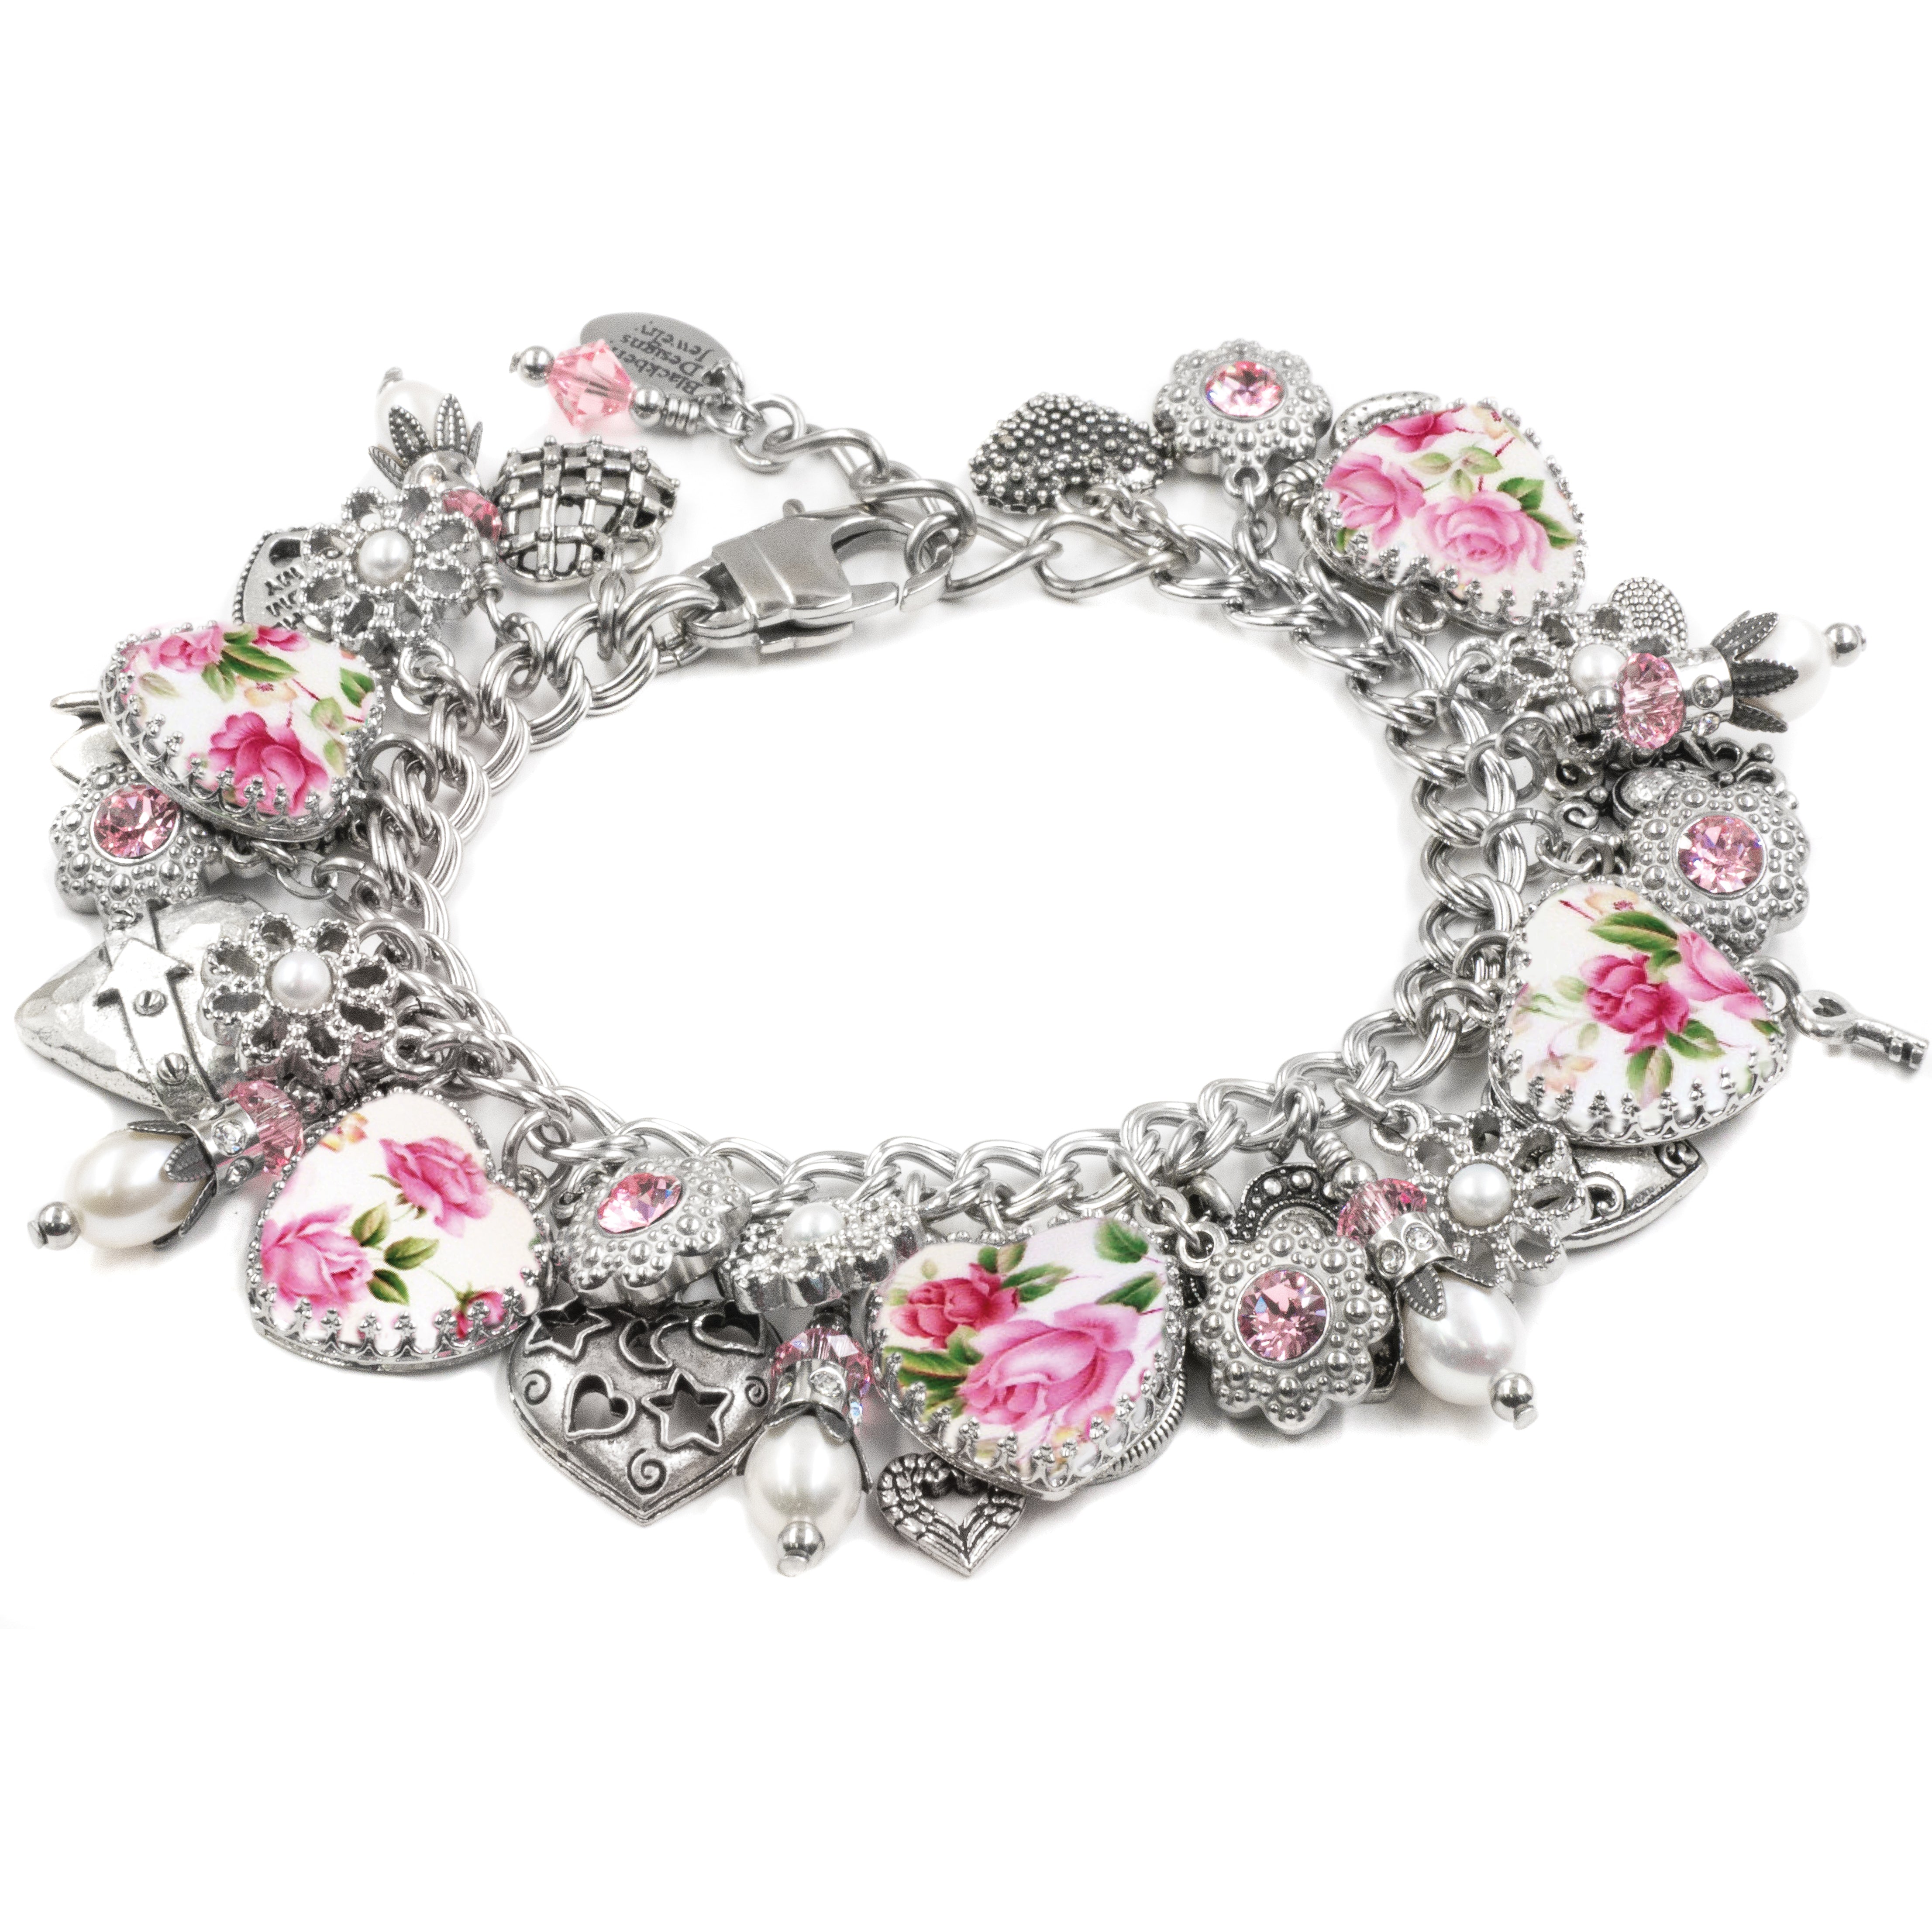 Pink Roses Broken China Jewelry Sterlling Bangle Bracelet